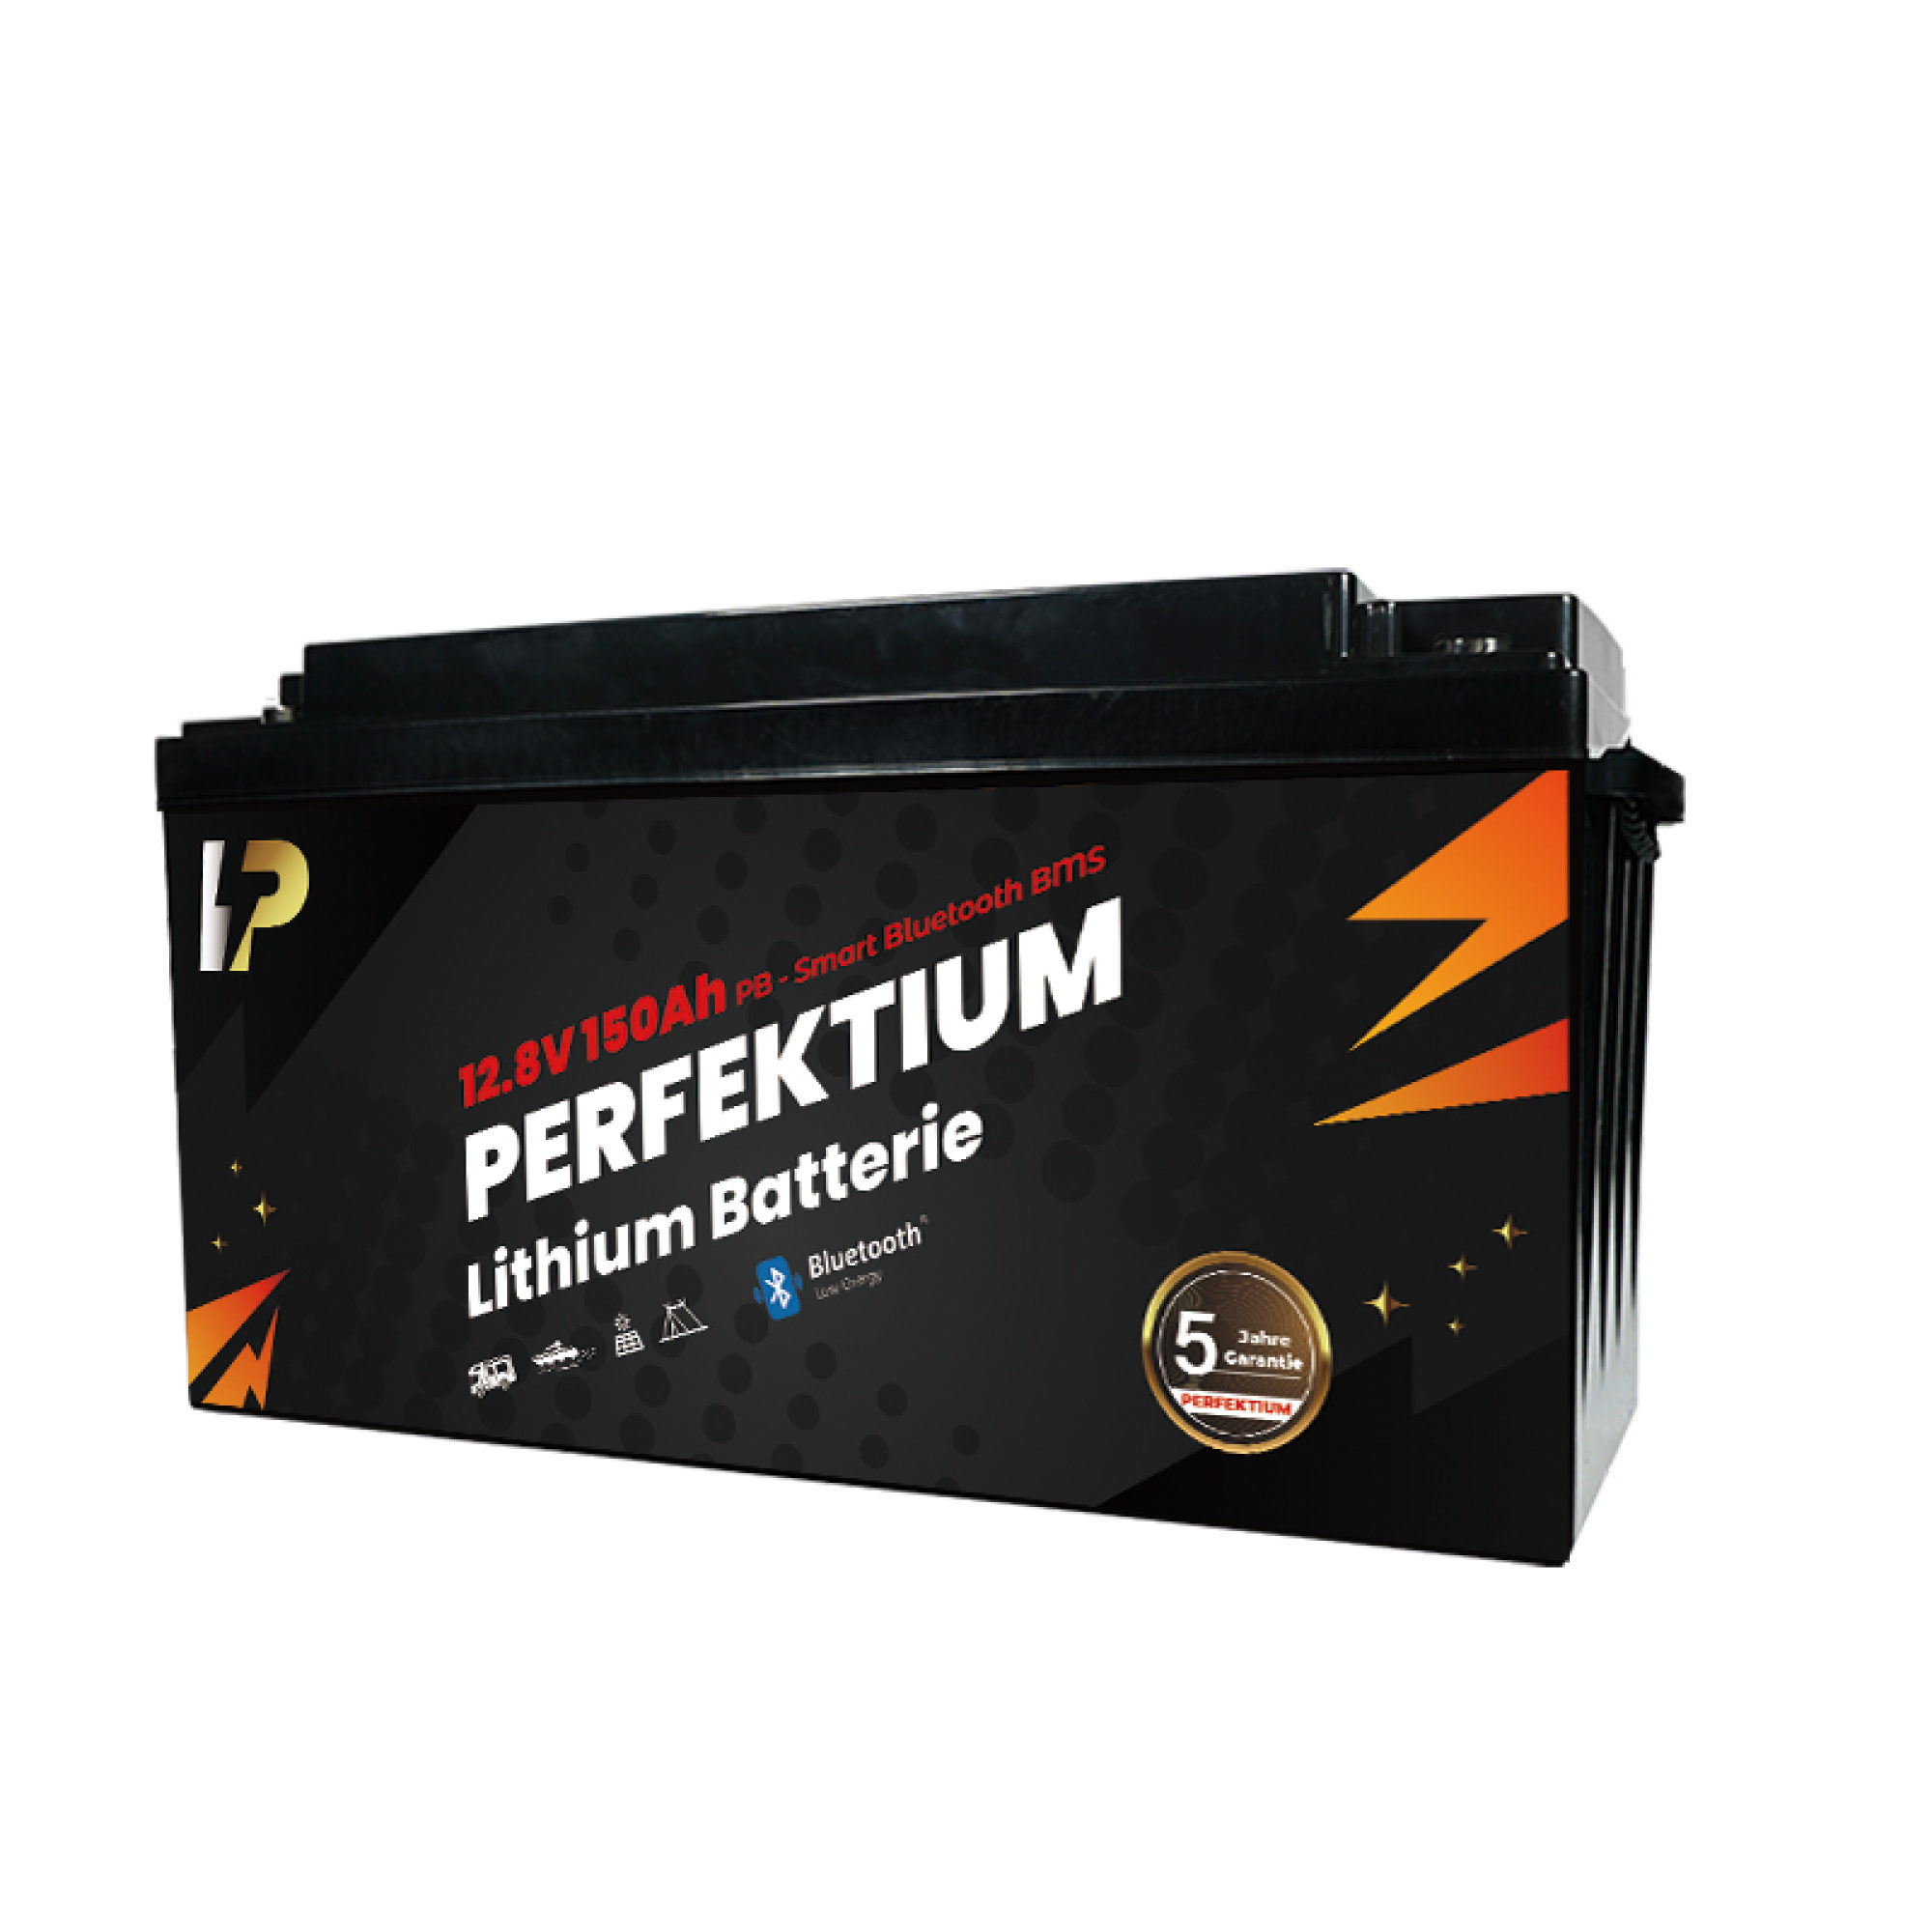 Perfektium LiFePO4 PB-12.8V 150Ah – Lithium Batterie Smart BMS mit Bluetooth – 5 Jahre Garantie